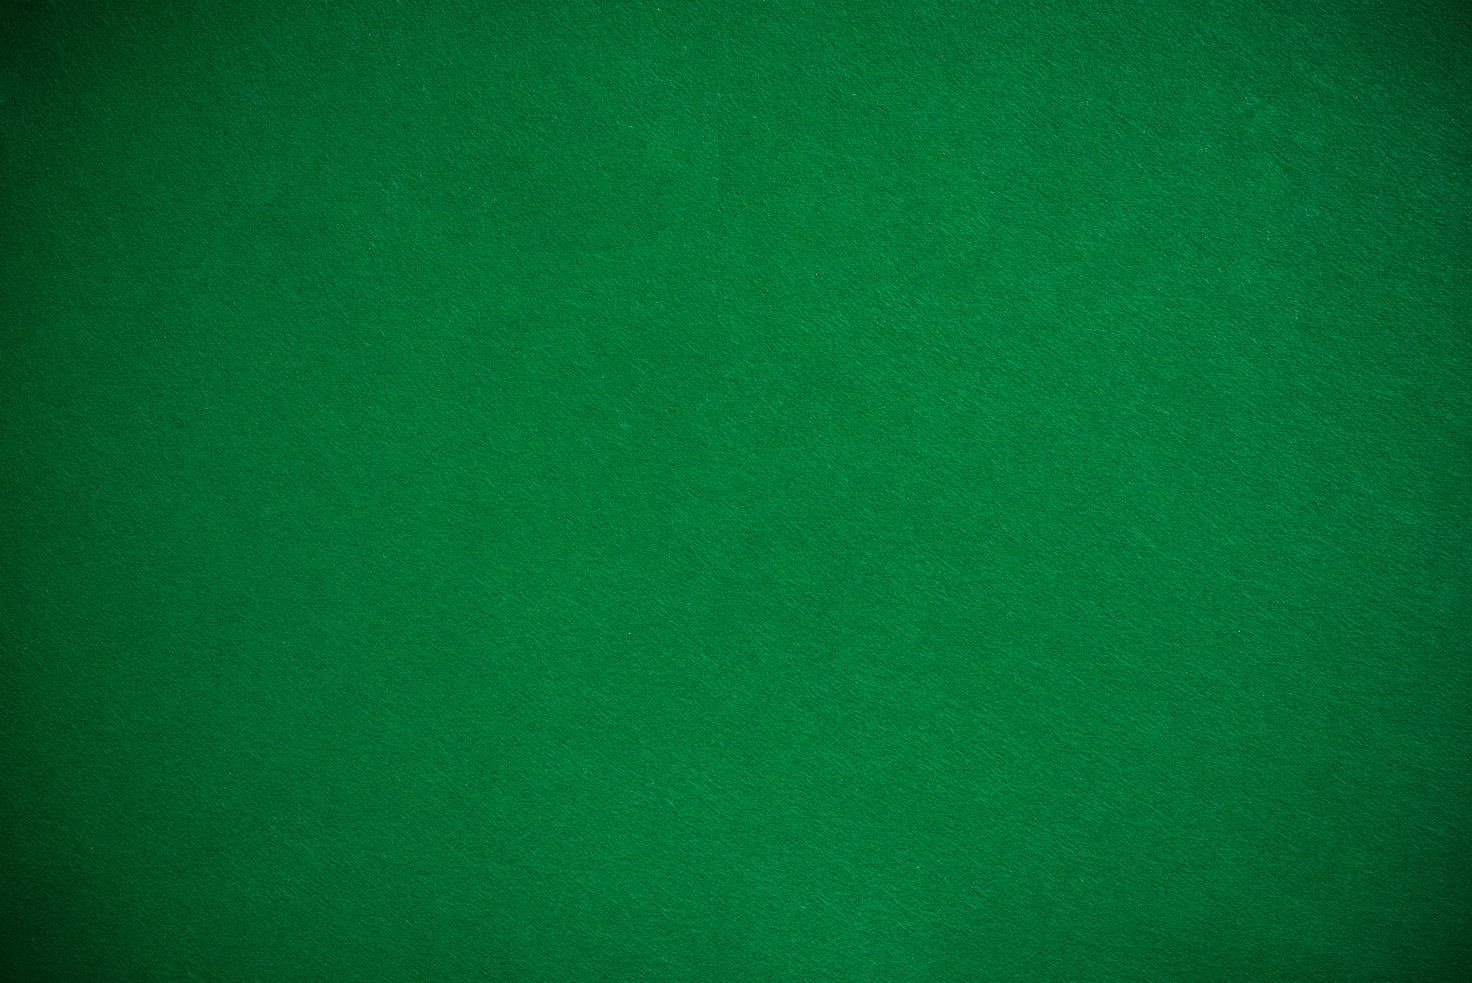 Emty Green Cloth Poker Table